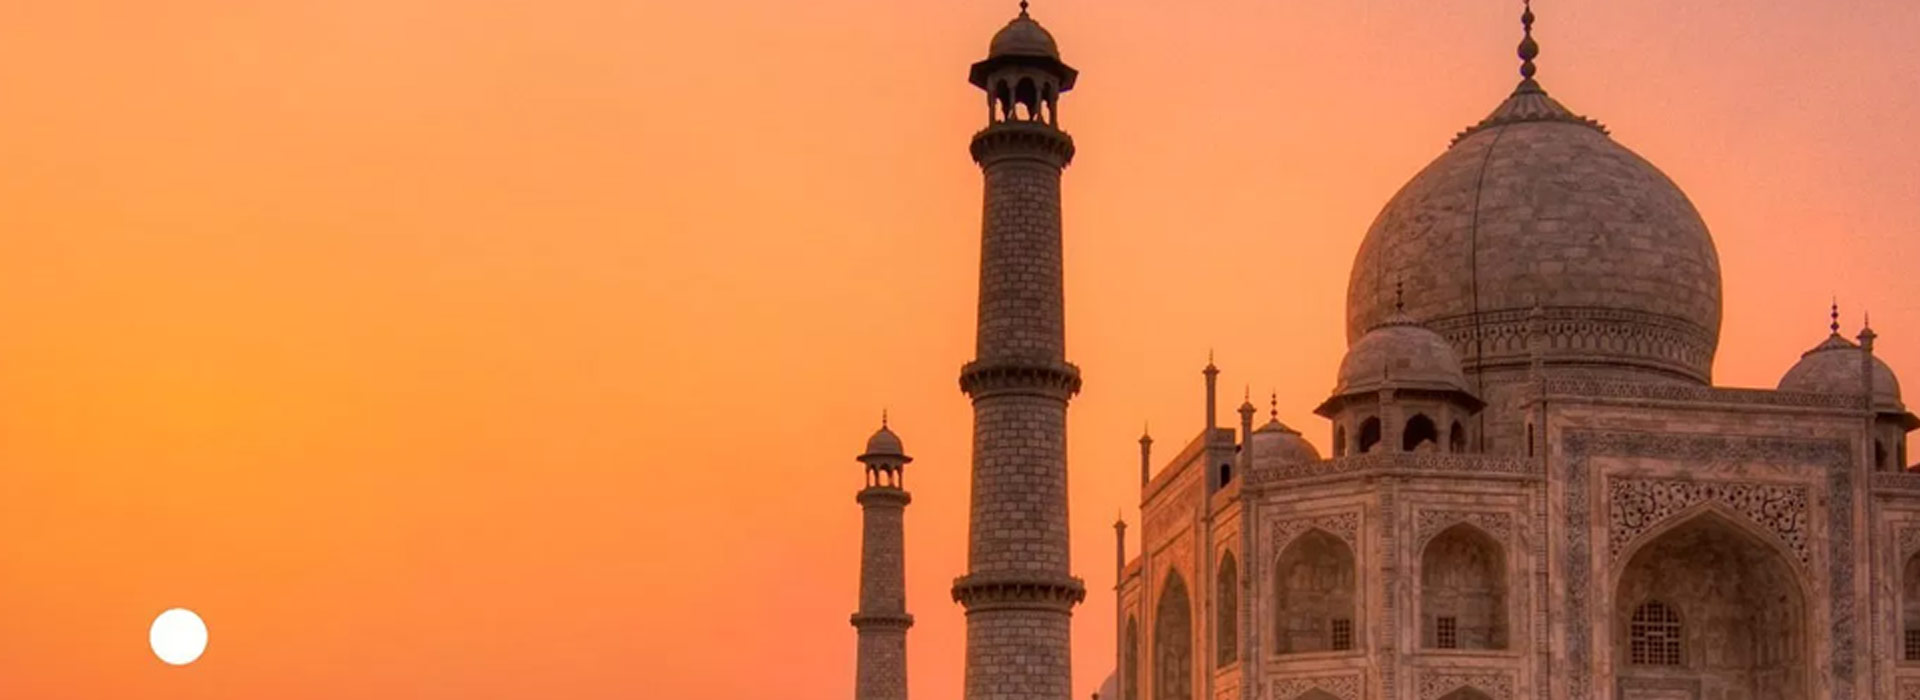 From Delhi: Taj Mahal Sunrise and Old Delhi Tour By Car